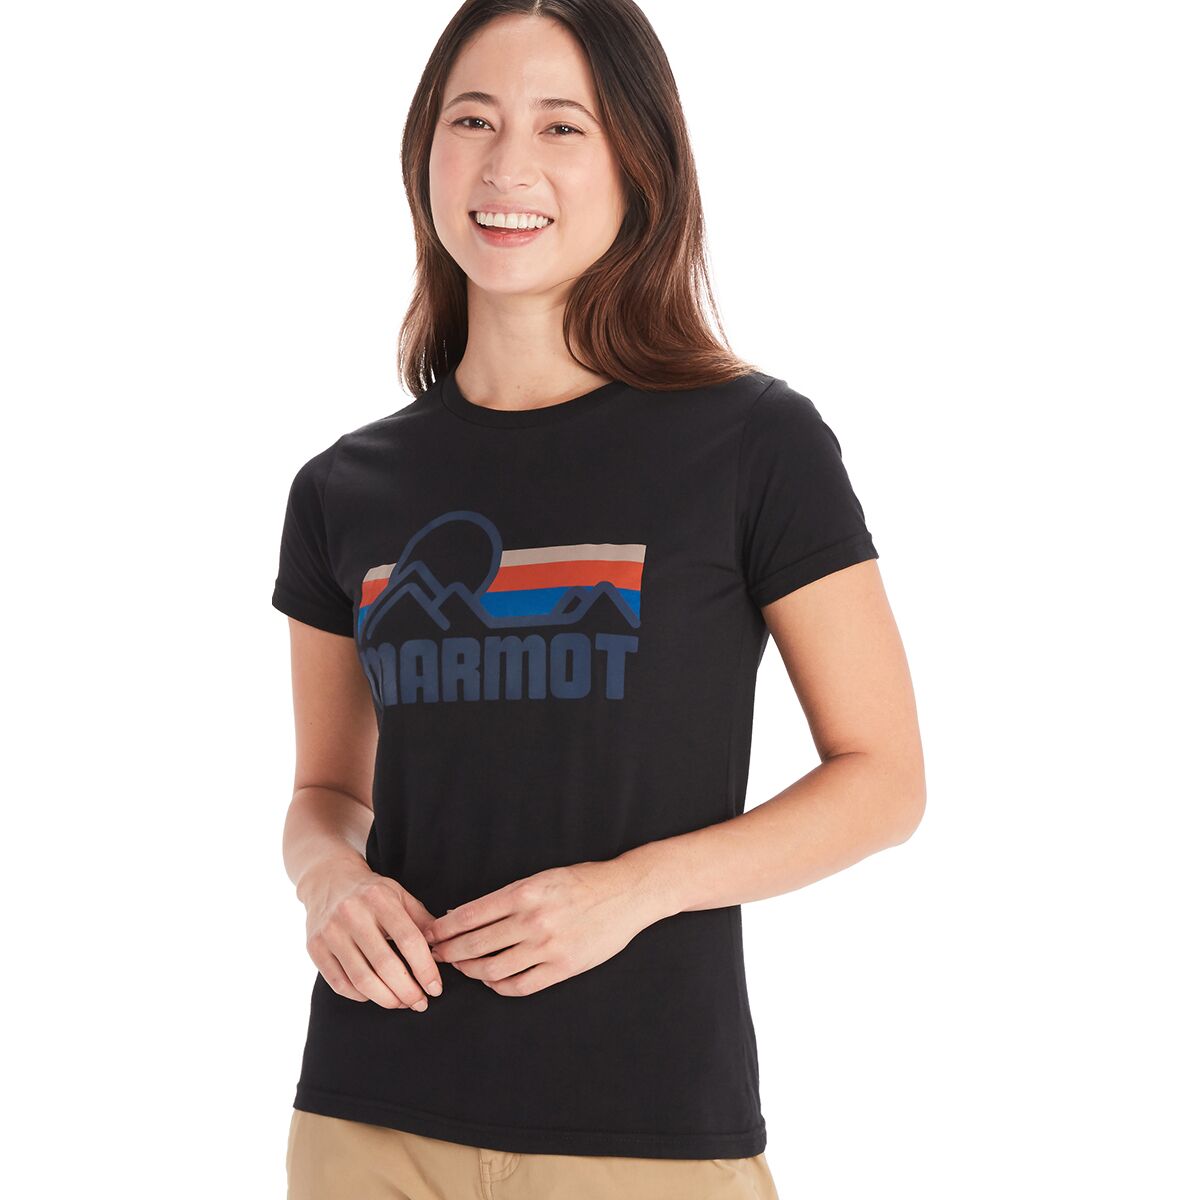 Coastal T-Shirt - Women